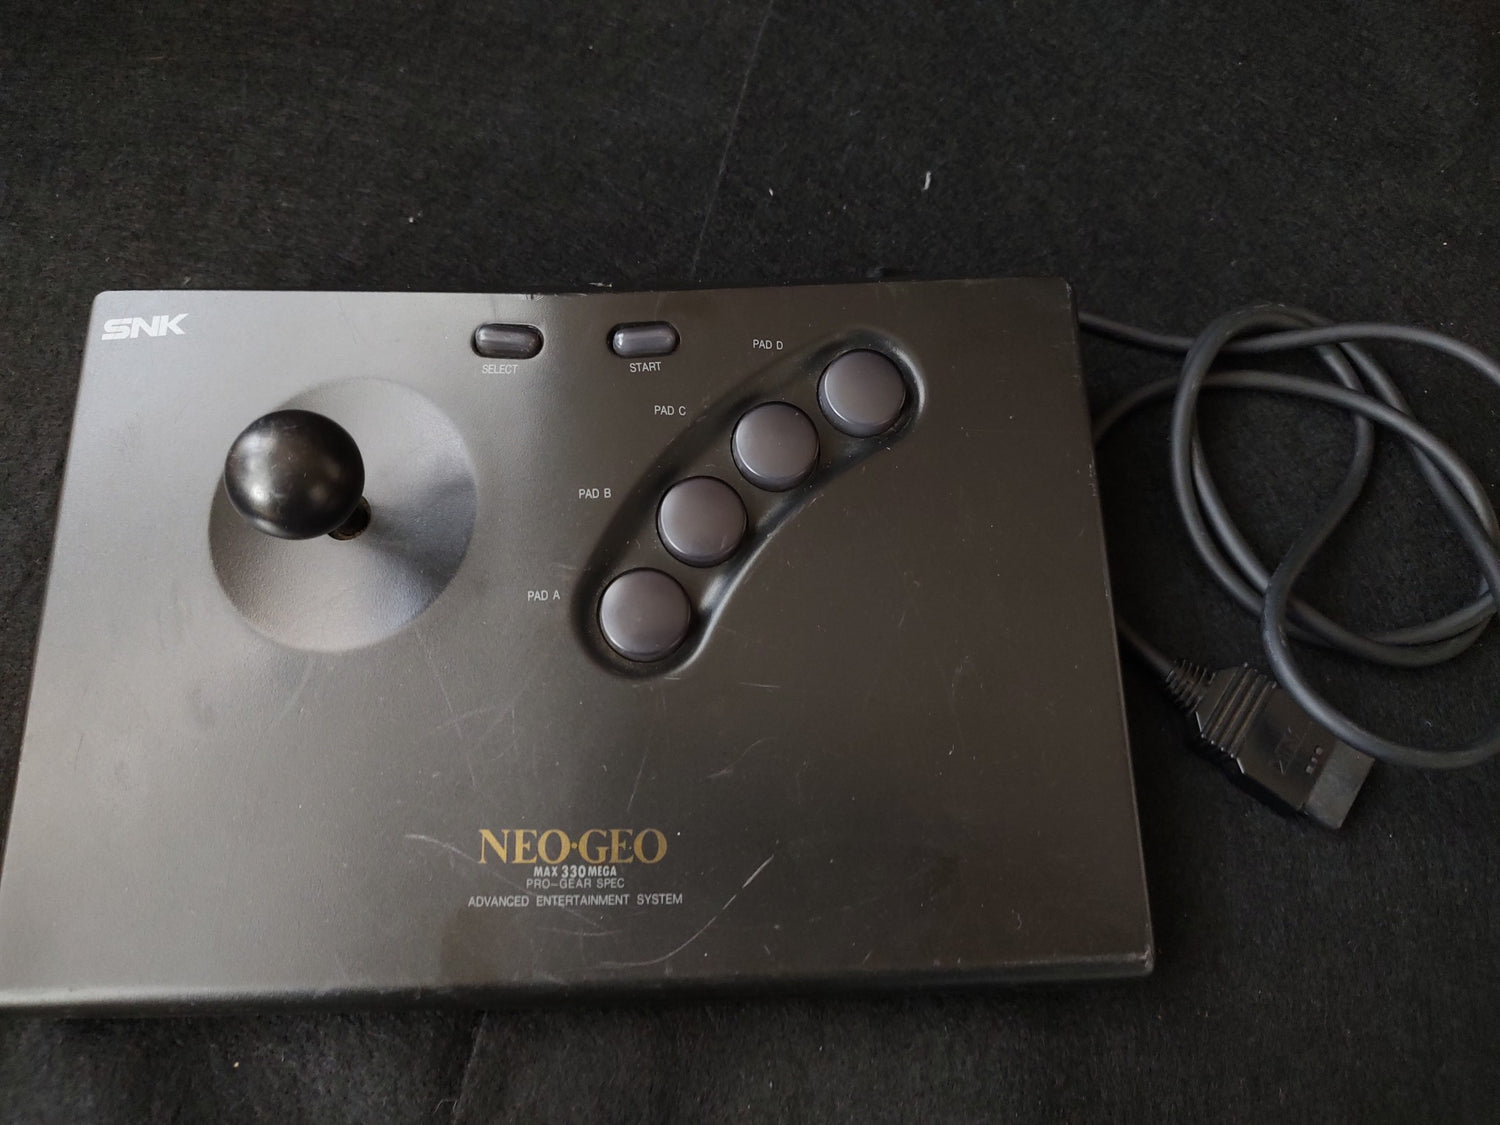 SNK NEO GEO NEOGEO ROM Console System AES, Fight Stick, PSU set 